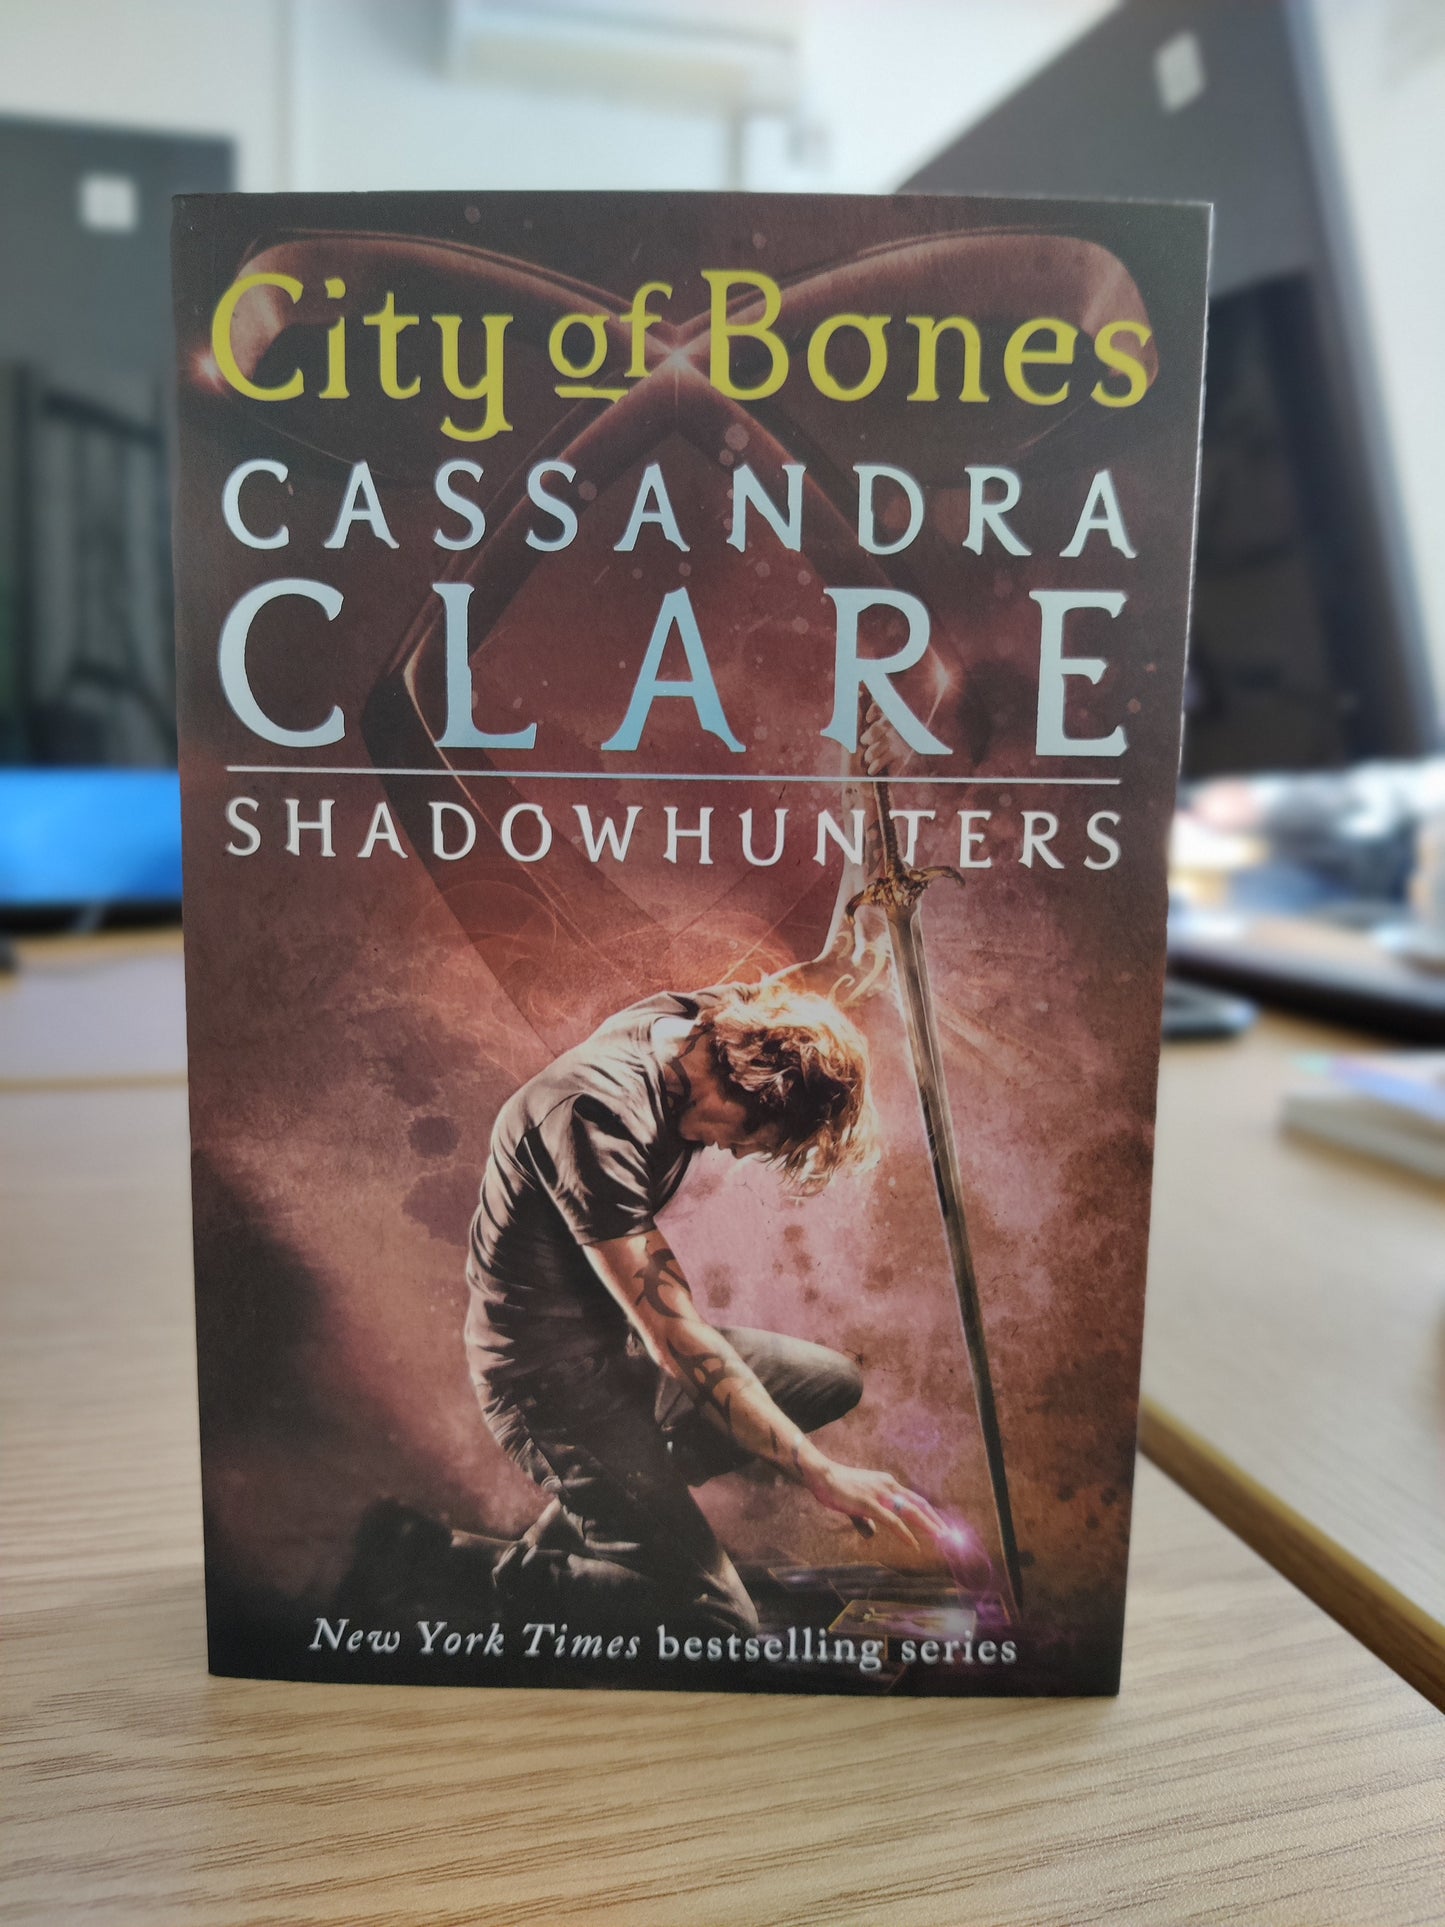 Shadowhunters, The Mortal Instruments: City of Bones